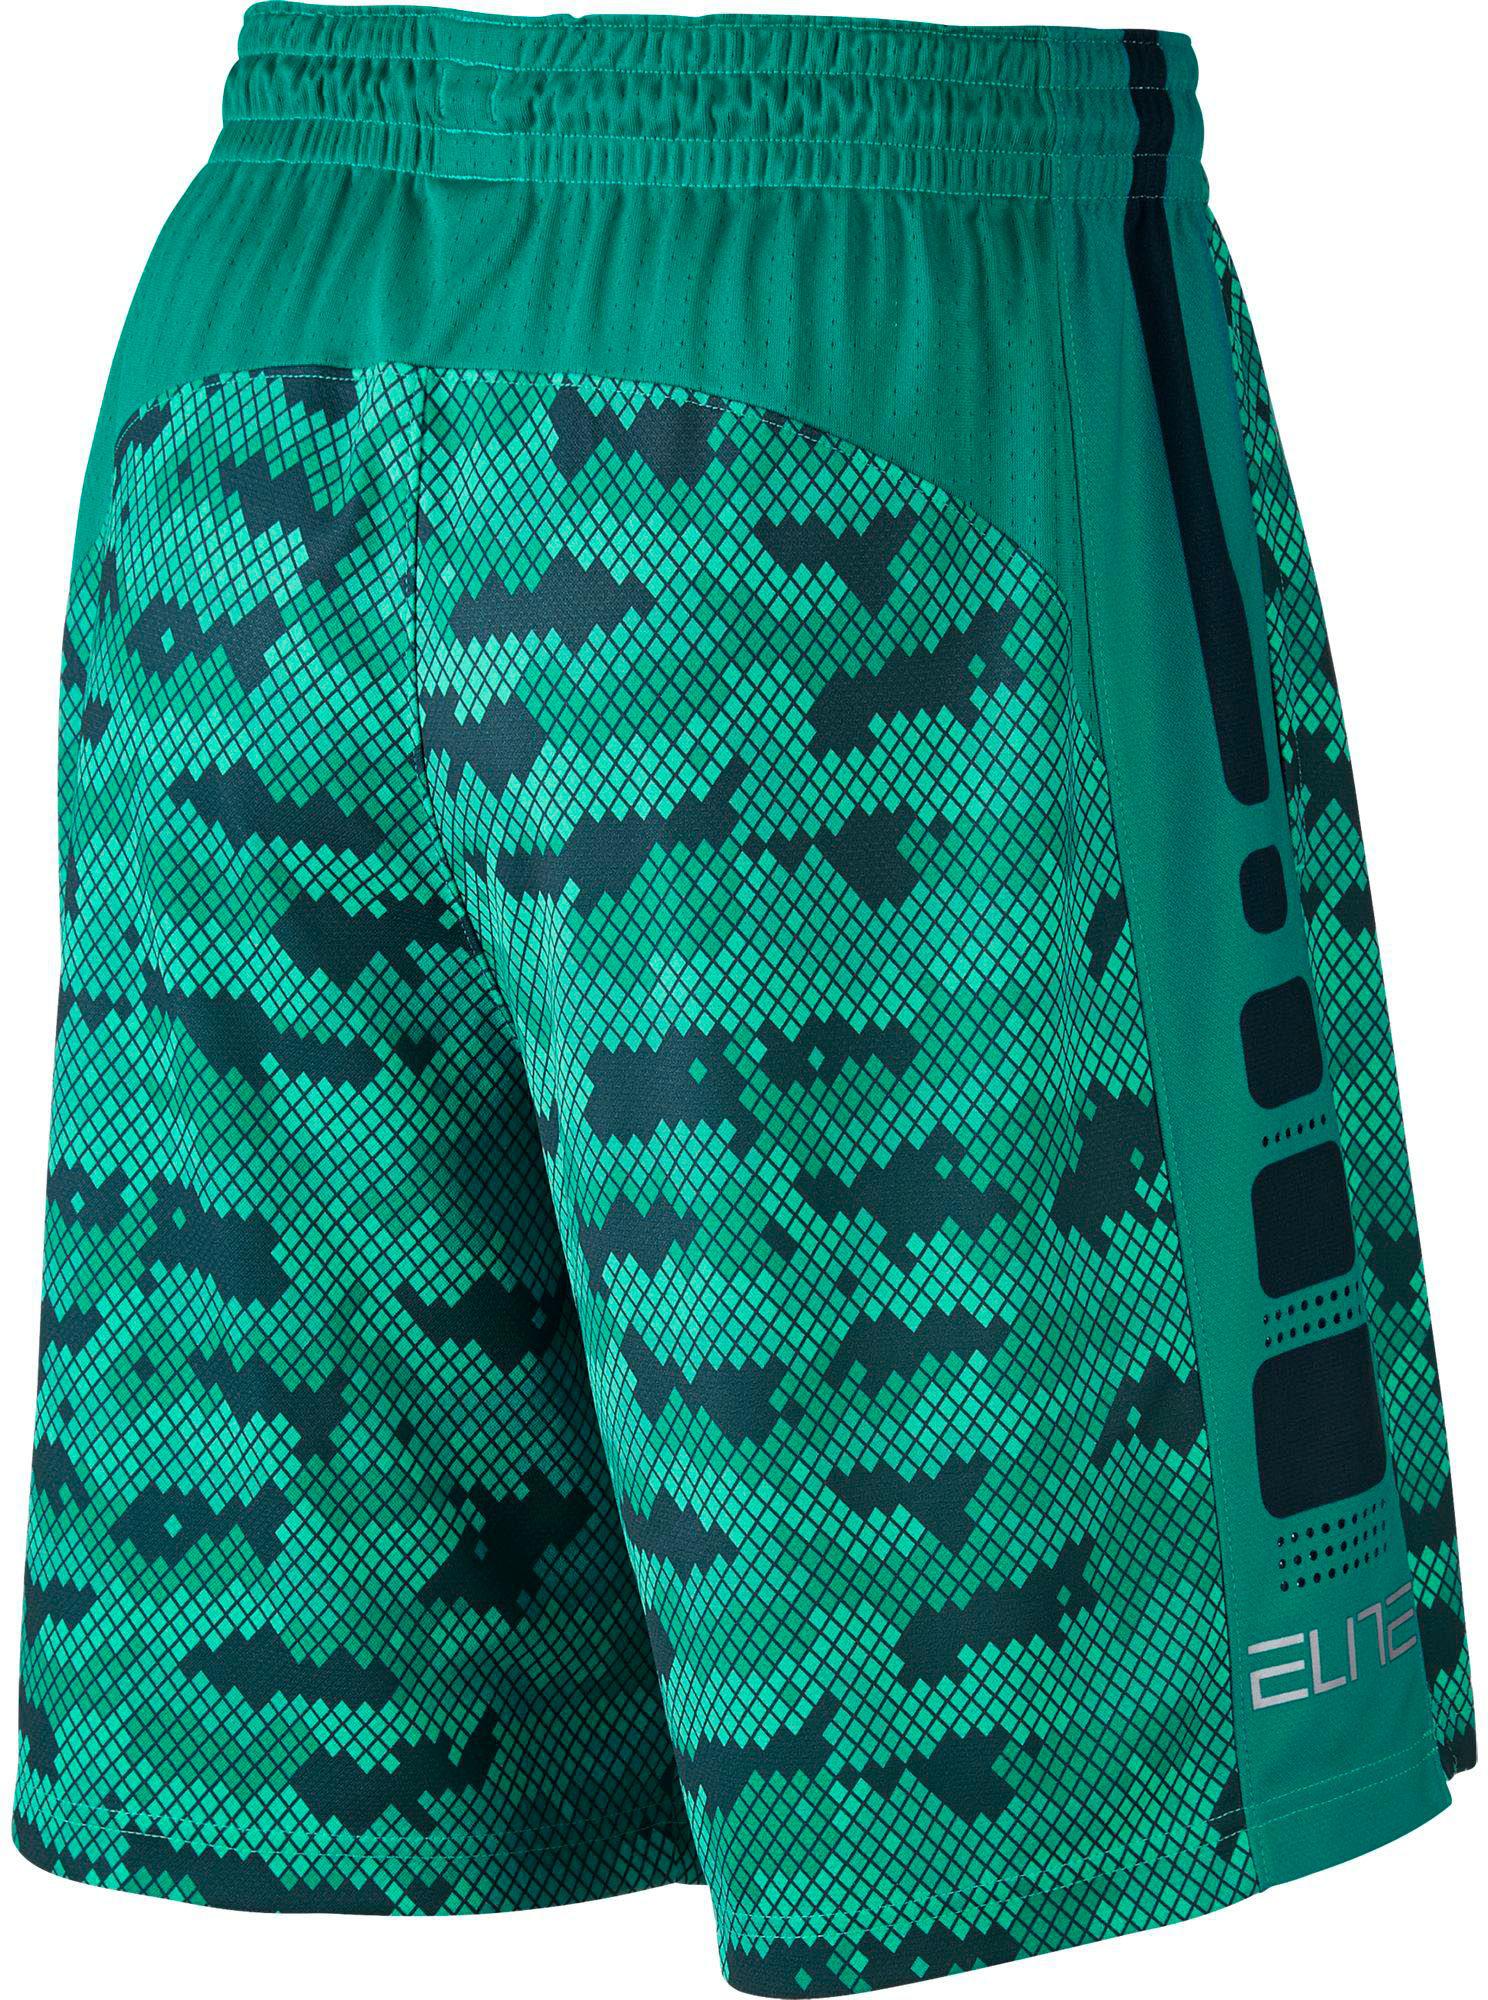 green nike elite shorts